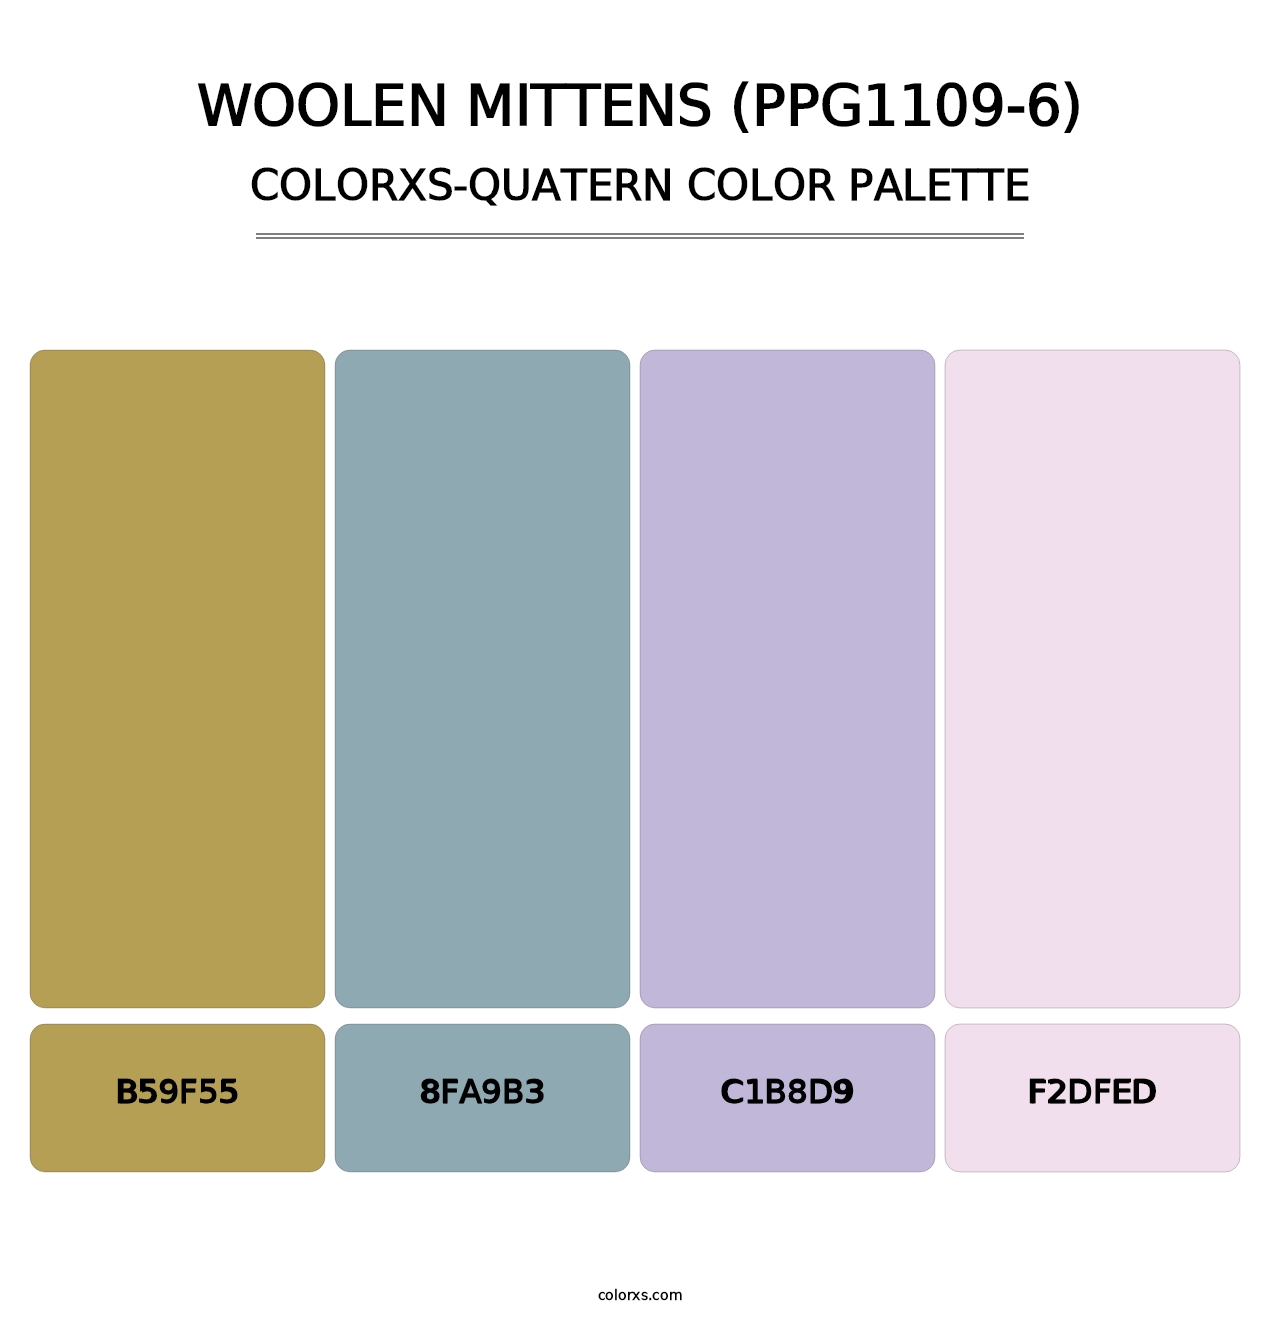 Woolen Mittens (PPG1109-6) - Colorxs Quatern Palette